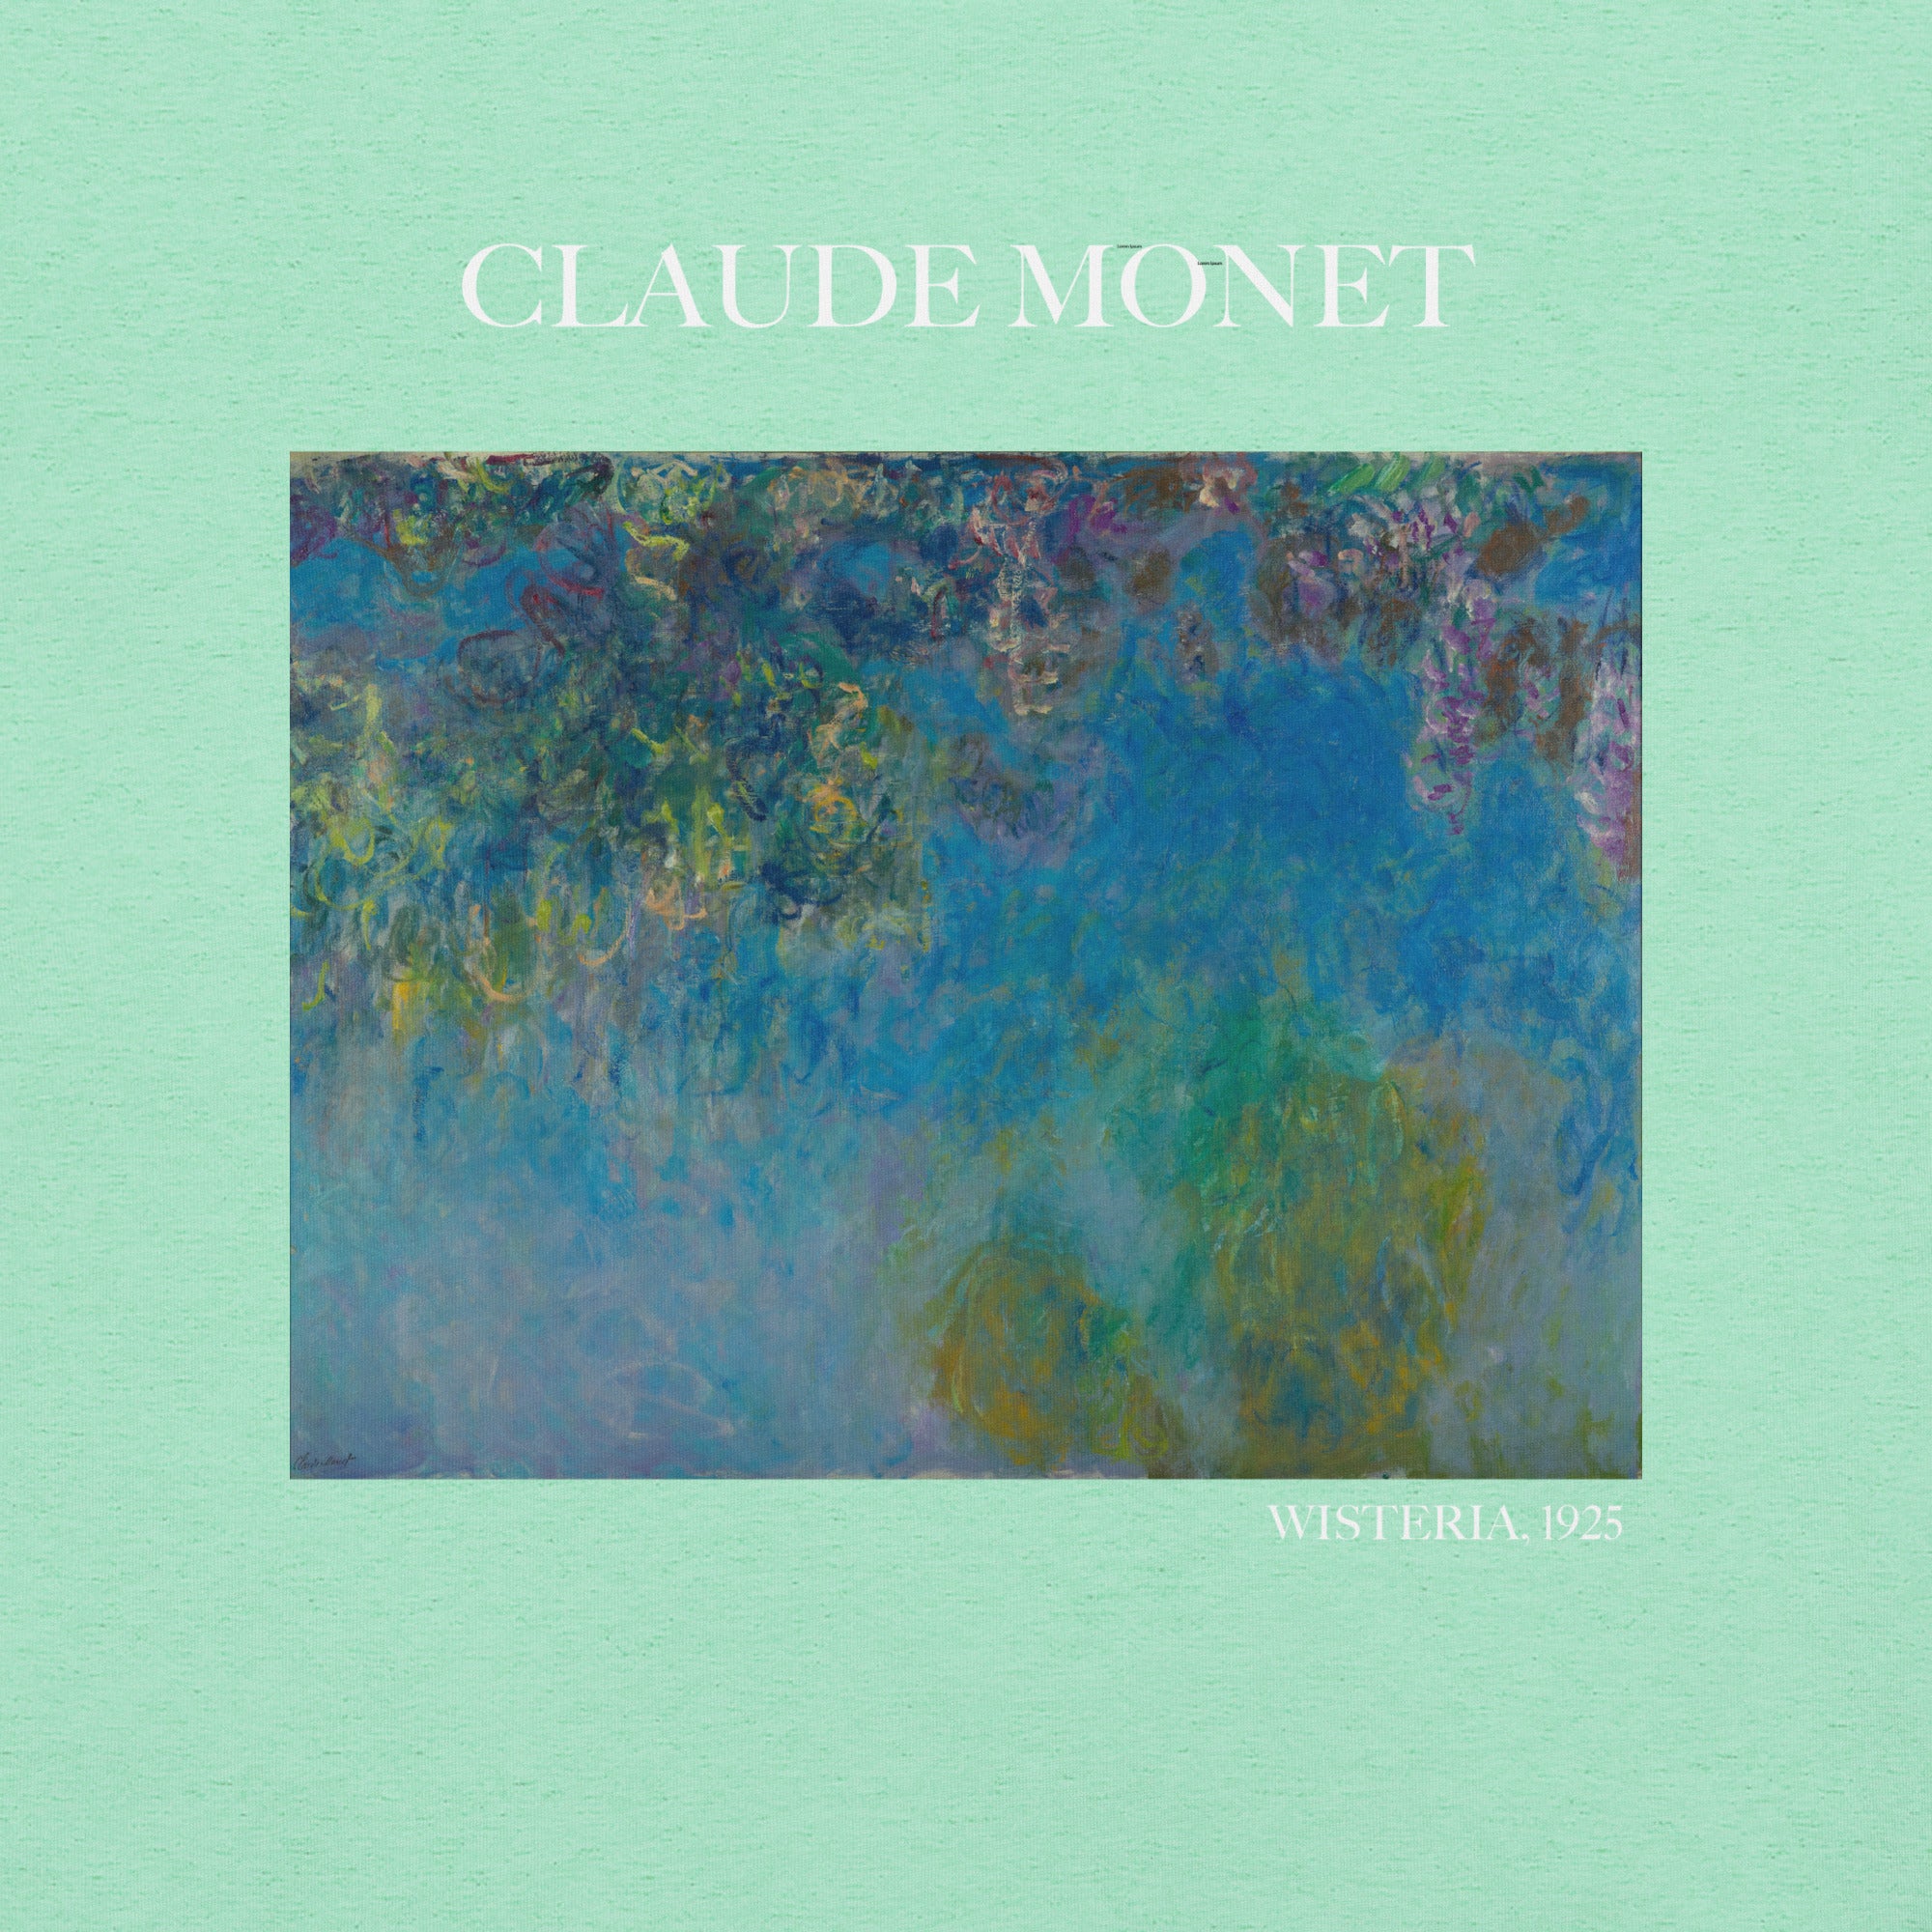 Claude Monet 'Wisteria' Famous Painting T-Shirt | Unisex Classic Art Tee